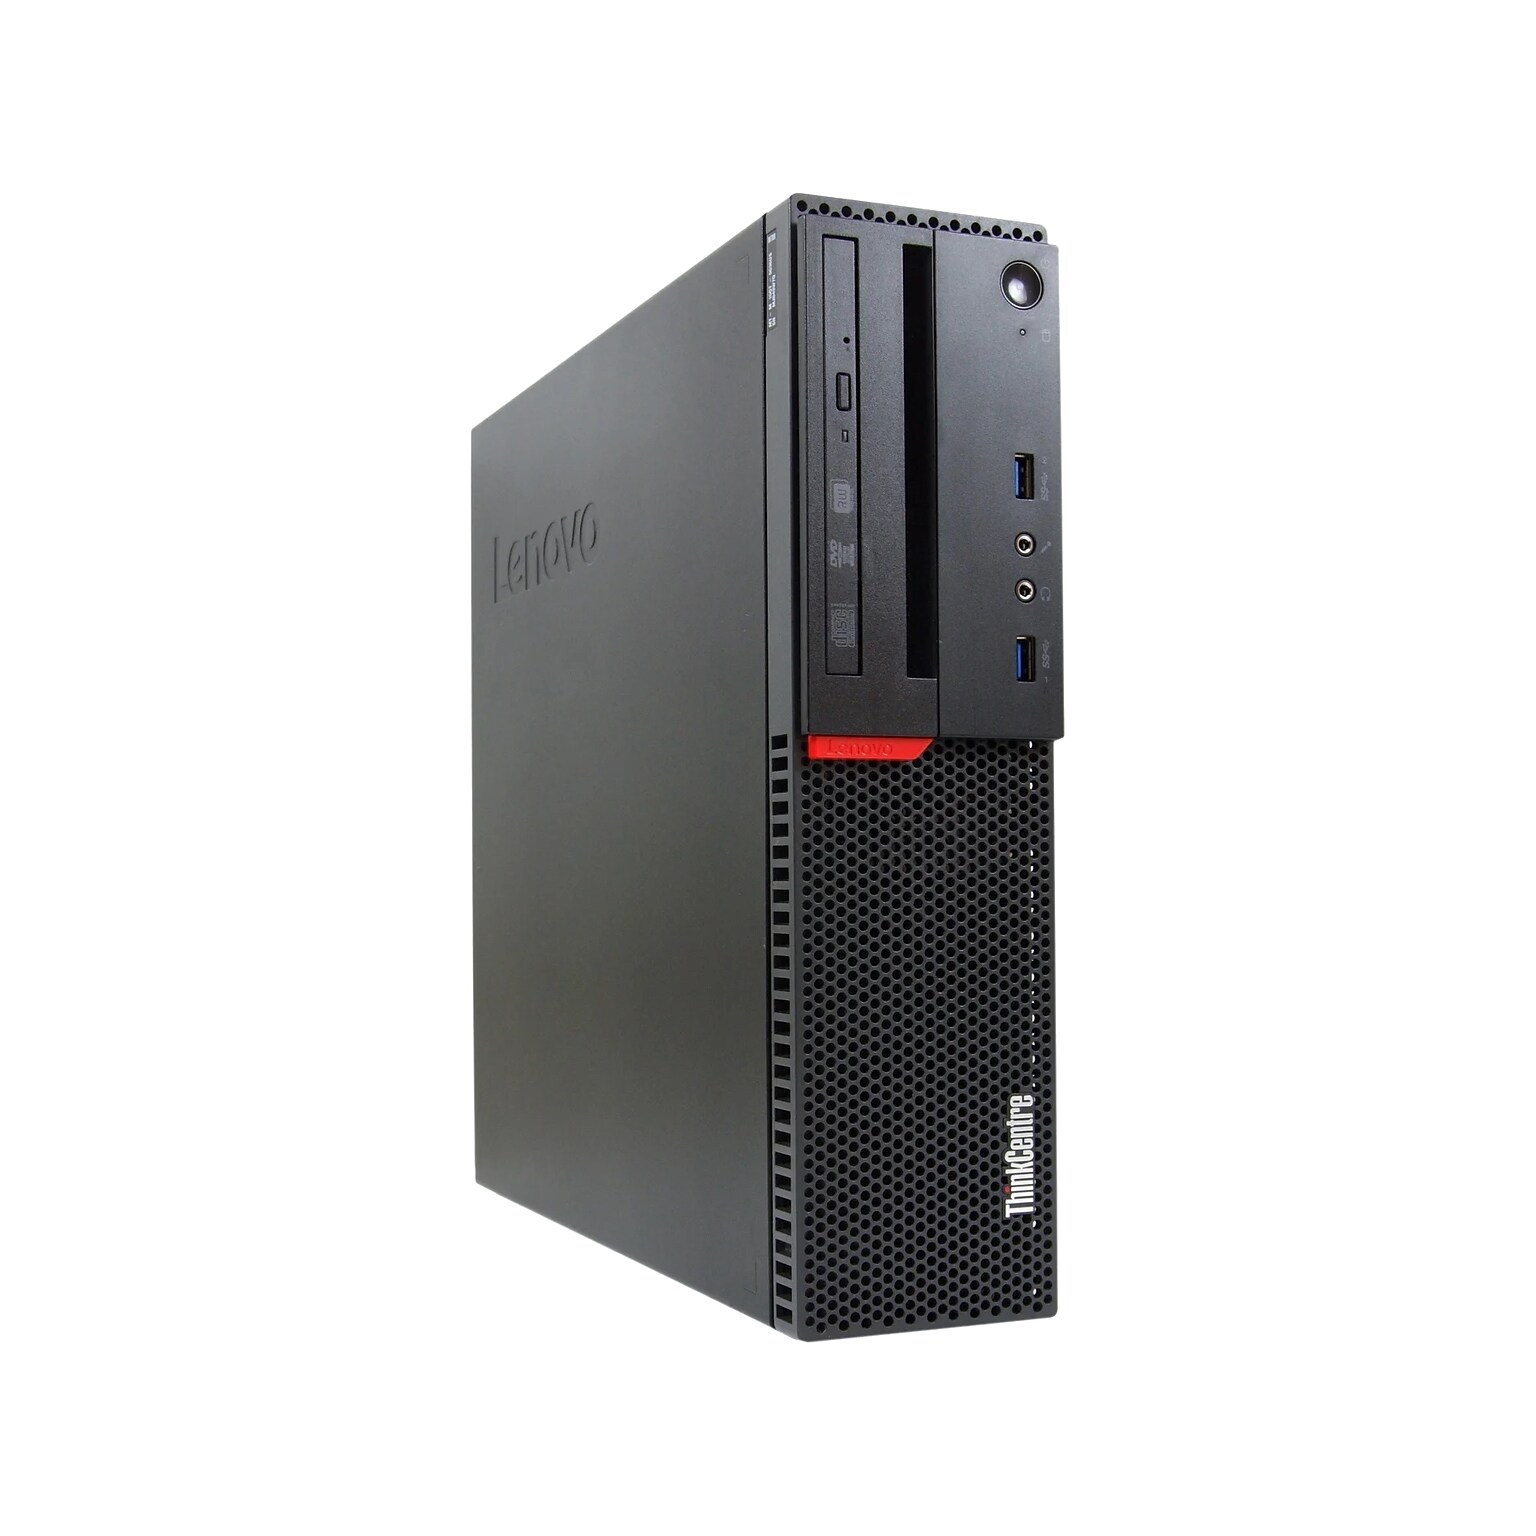 Lenovo ThinkCentre M700 Refurbished Desktop Computer, Intel Core i7-6700, 16GB Memory, 256GB SSD (10FY0029US)